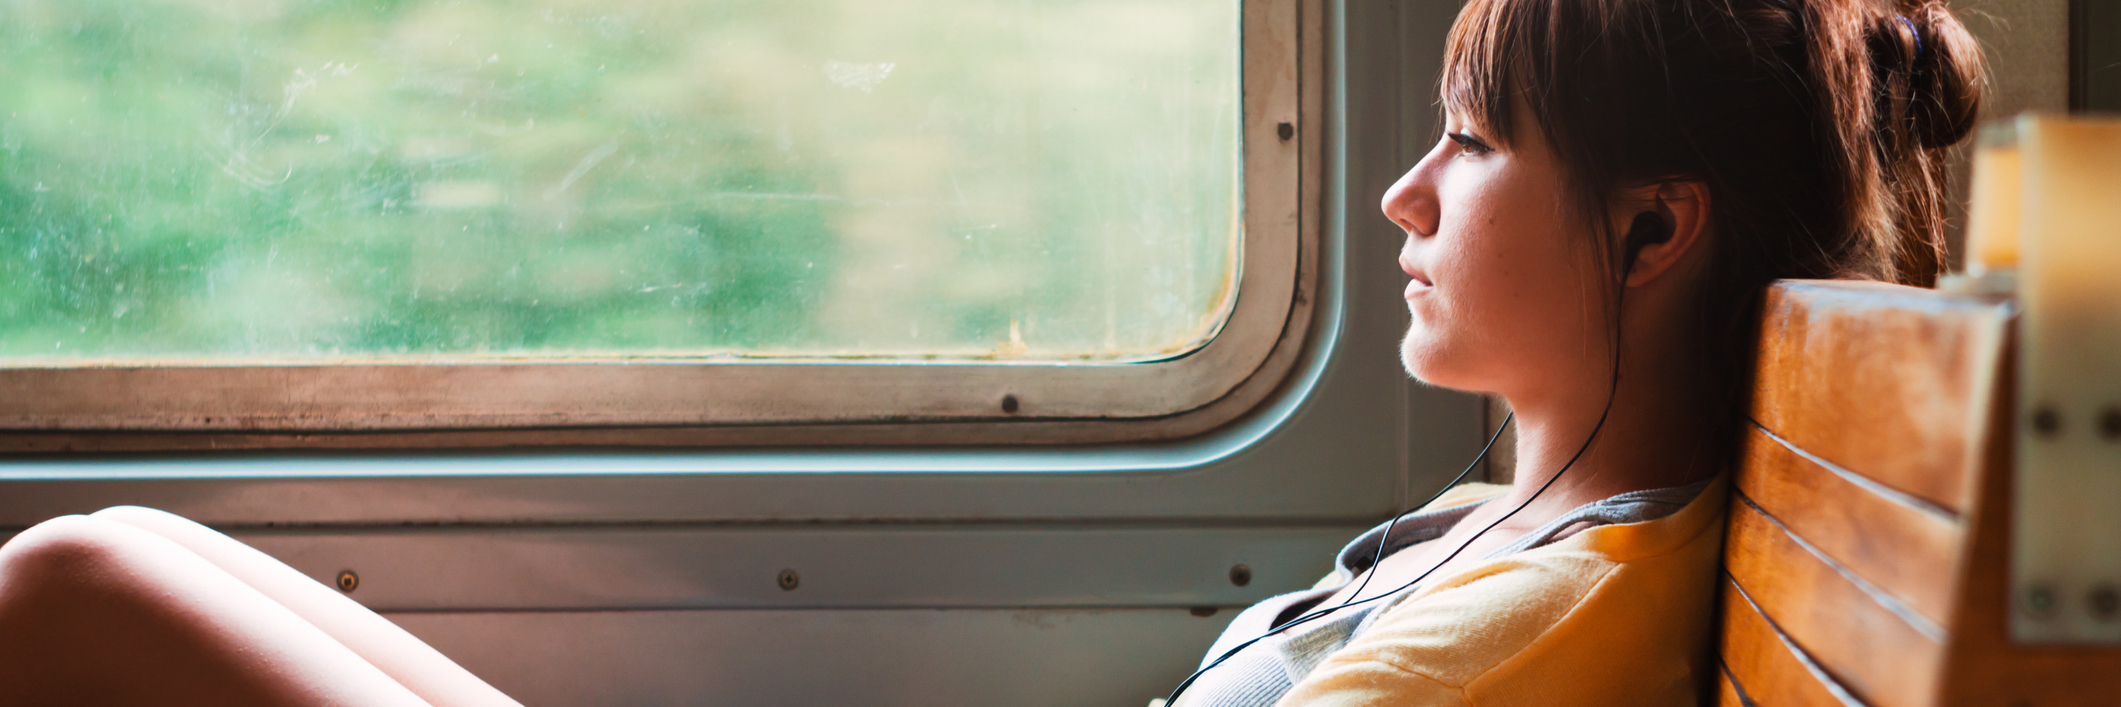 sad or contemplative girl on train listening to music on headphones